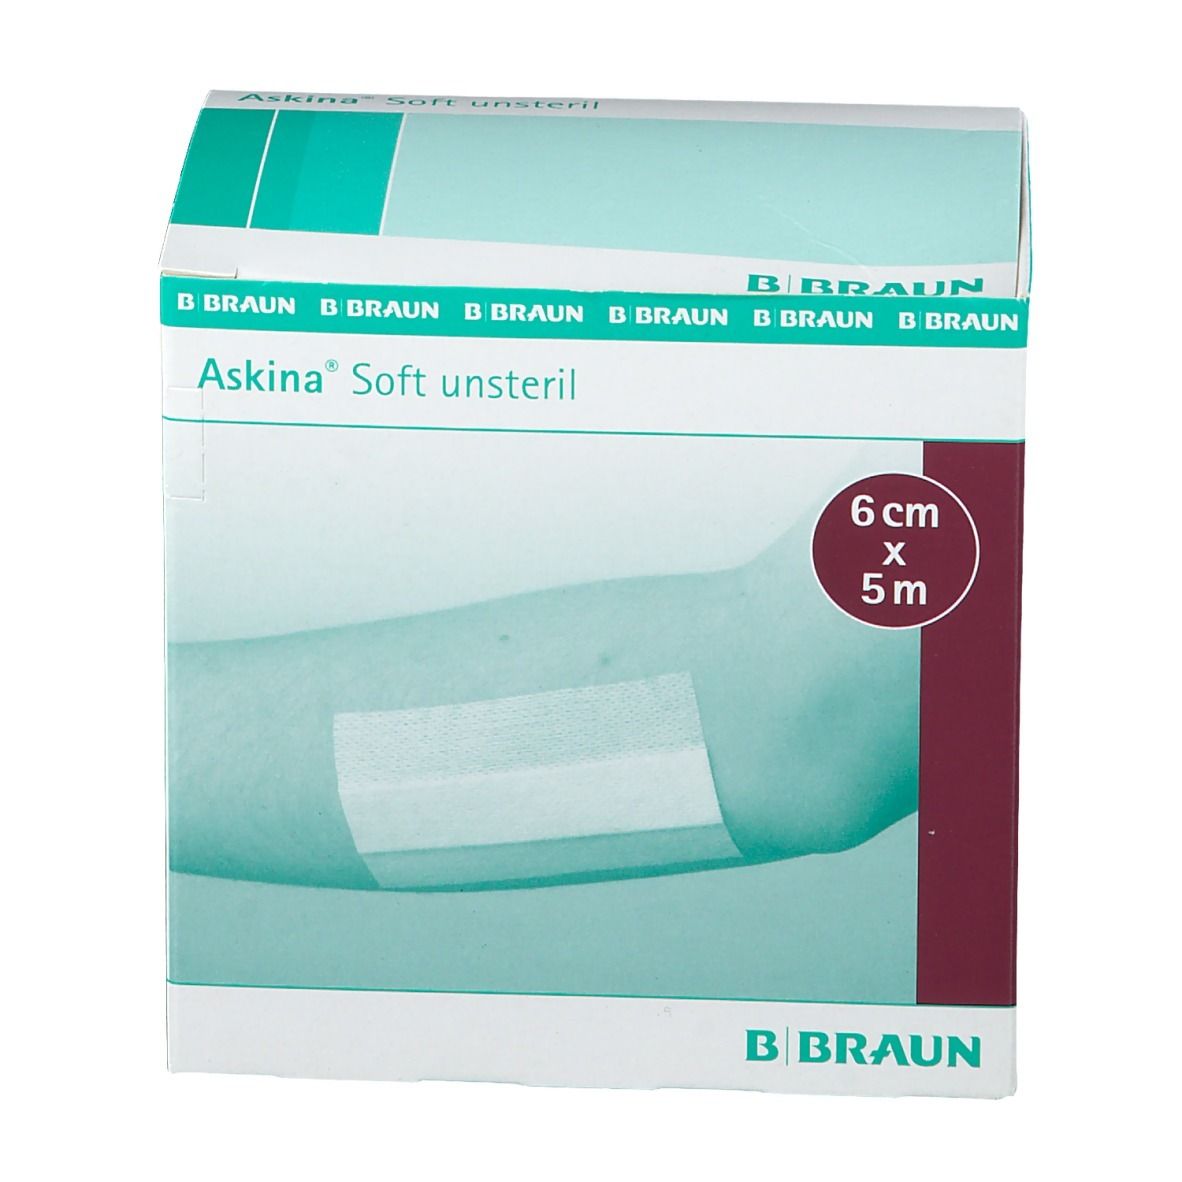 Askina® Soft Wundverband unsteril 6 cm x 5 m